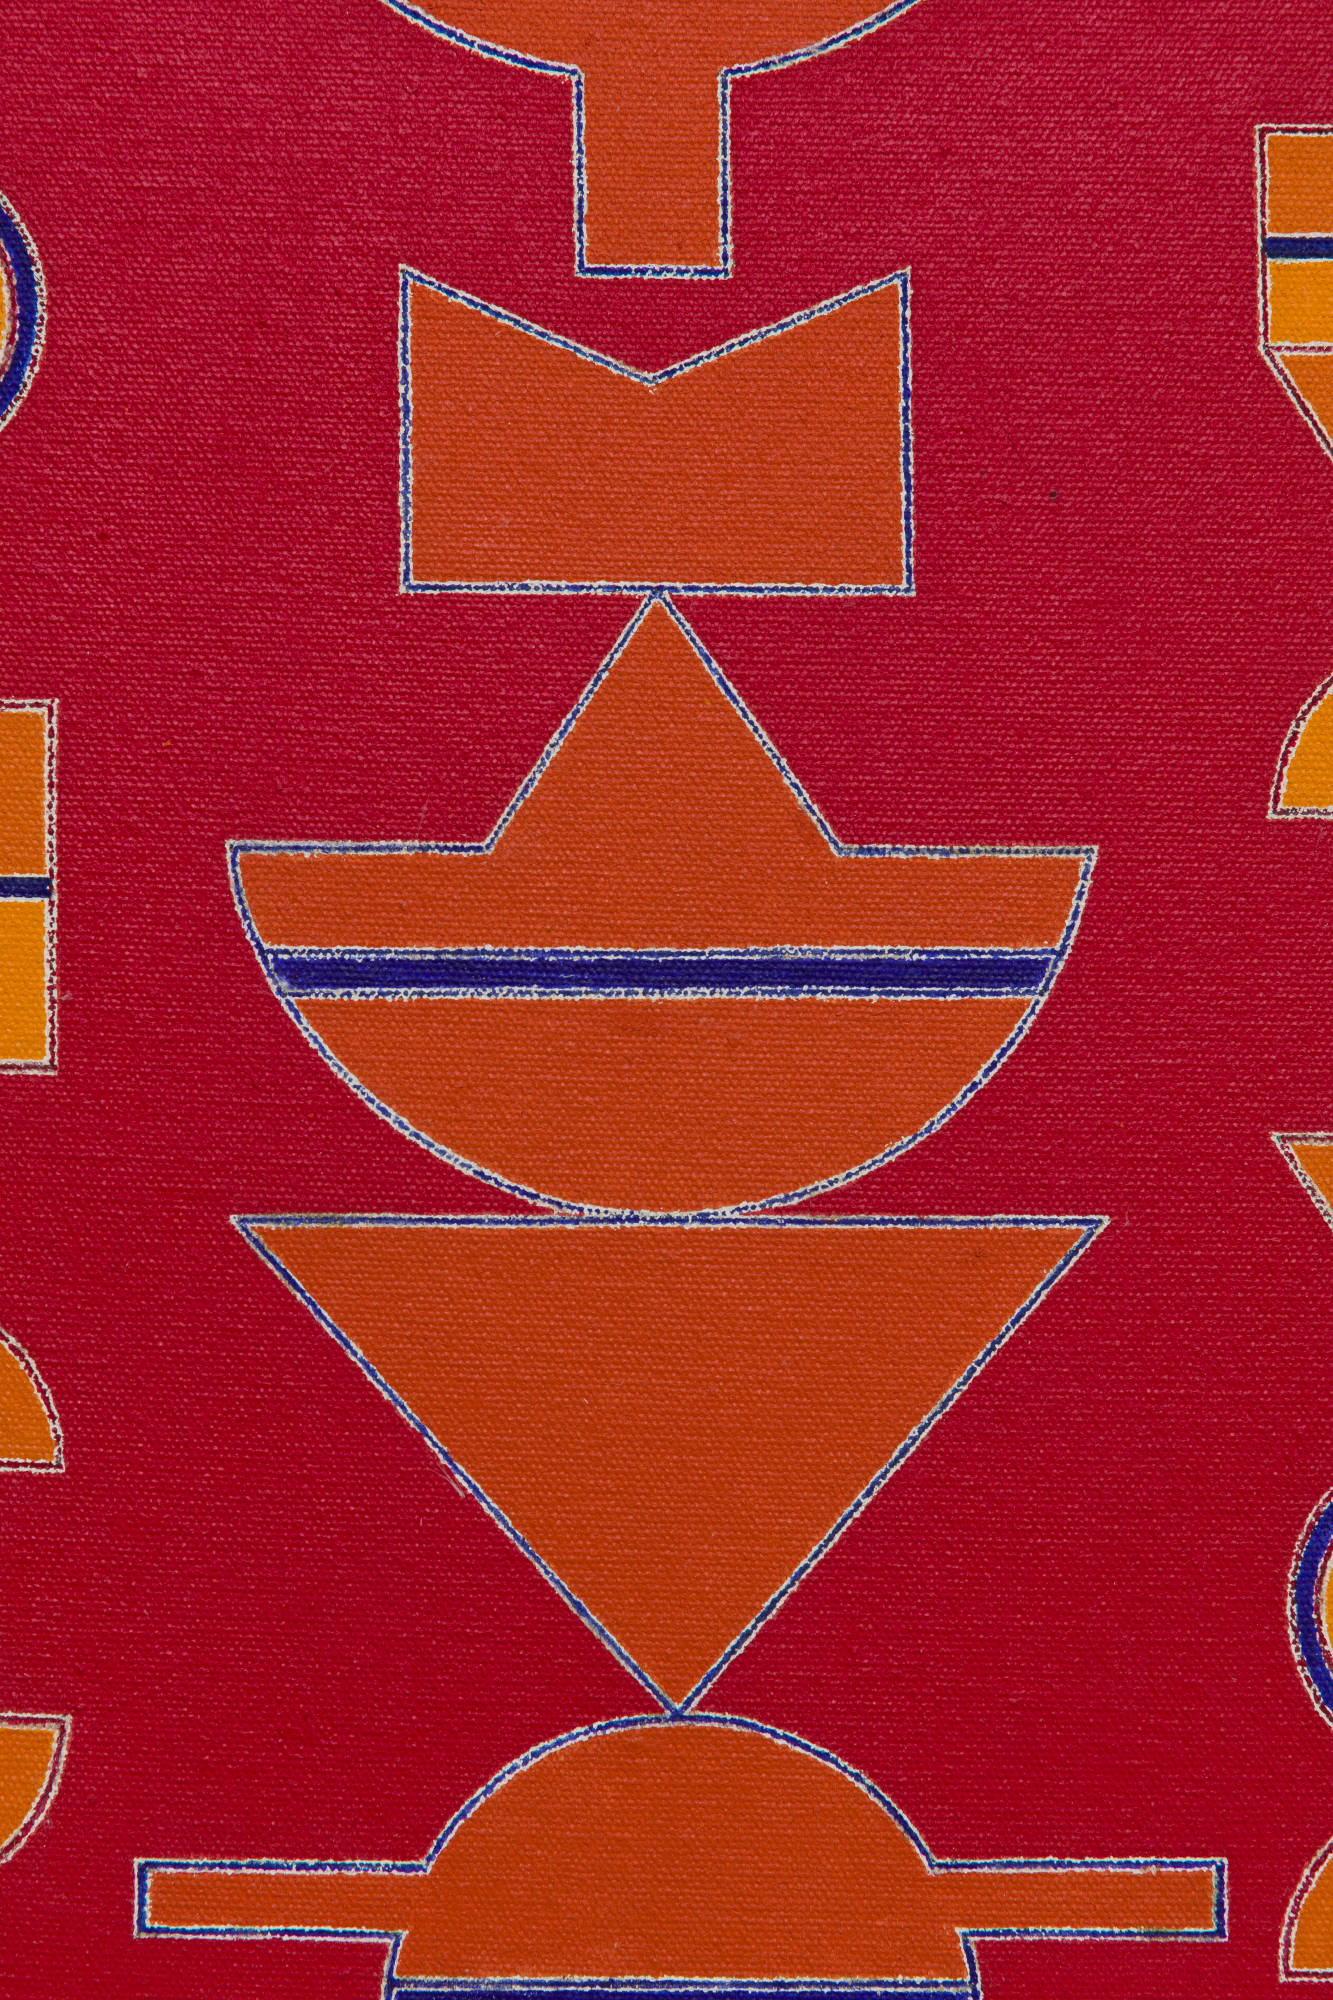 Rubem Valentim | Emblema 87, 1987-88